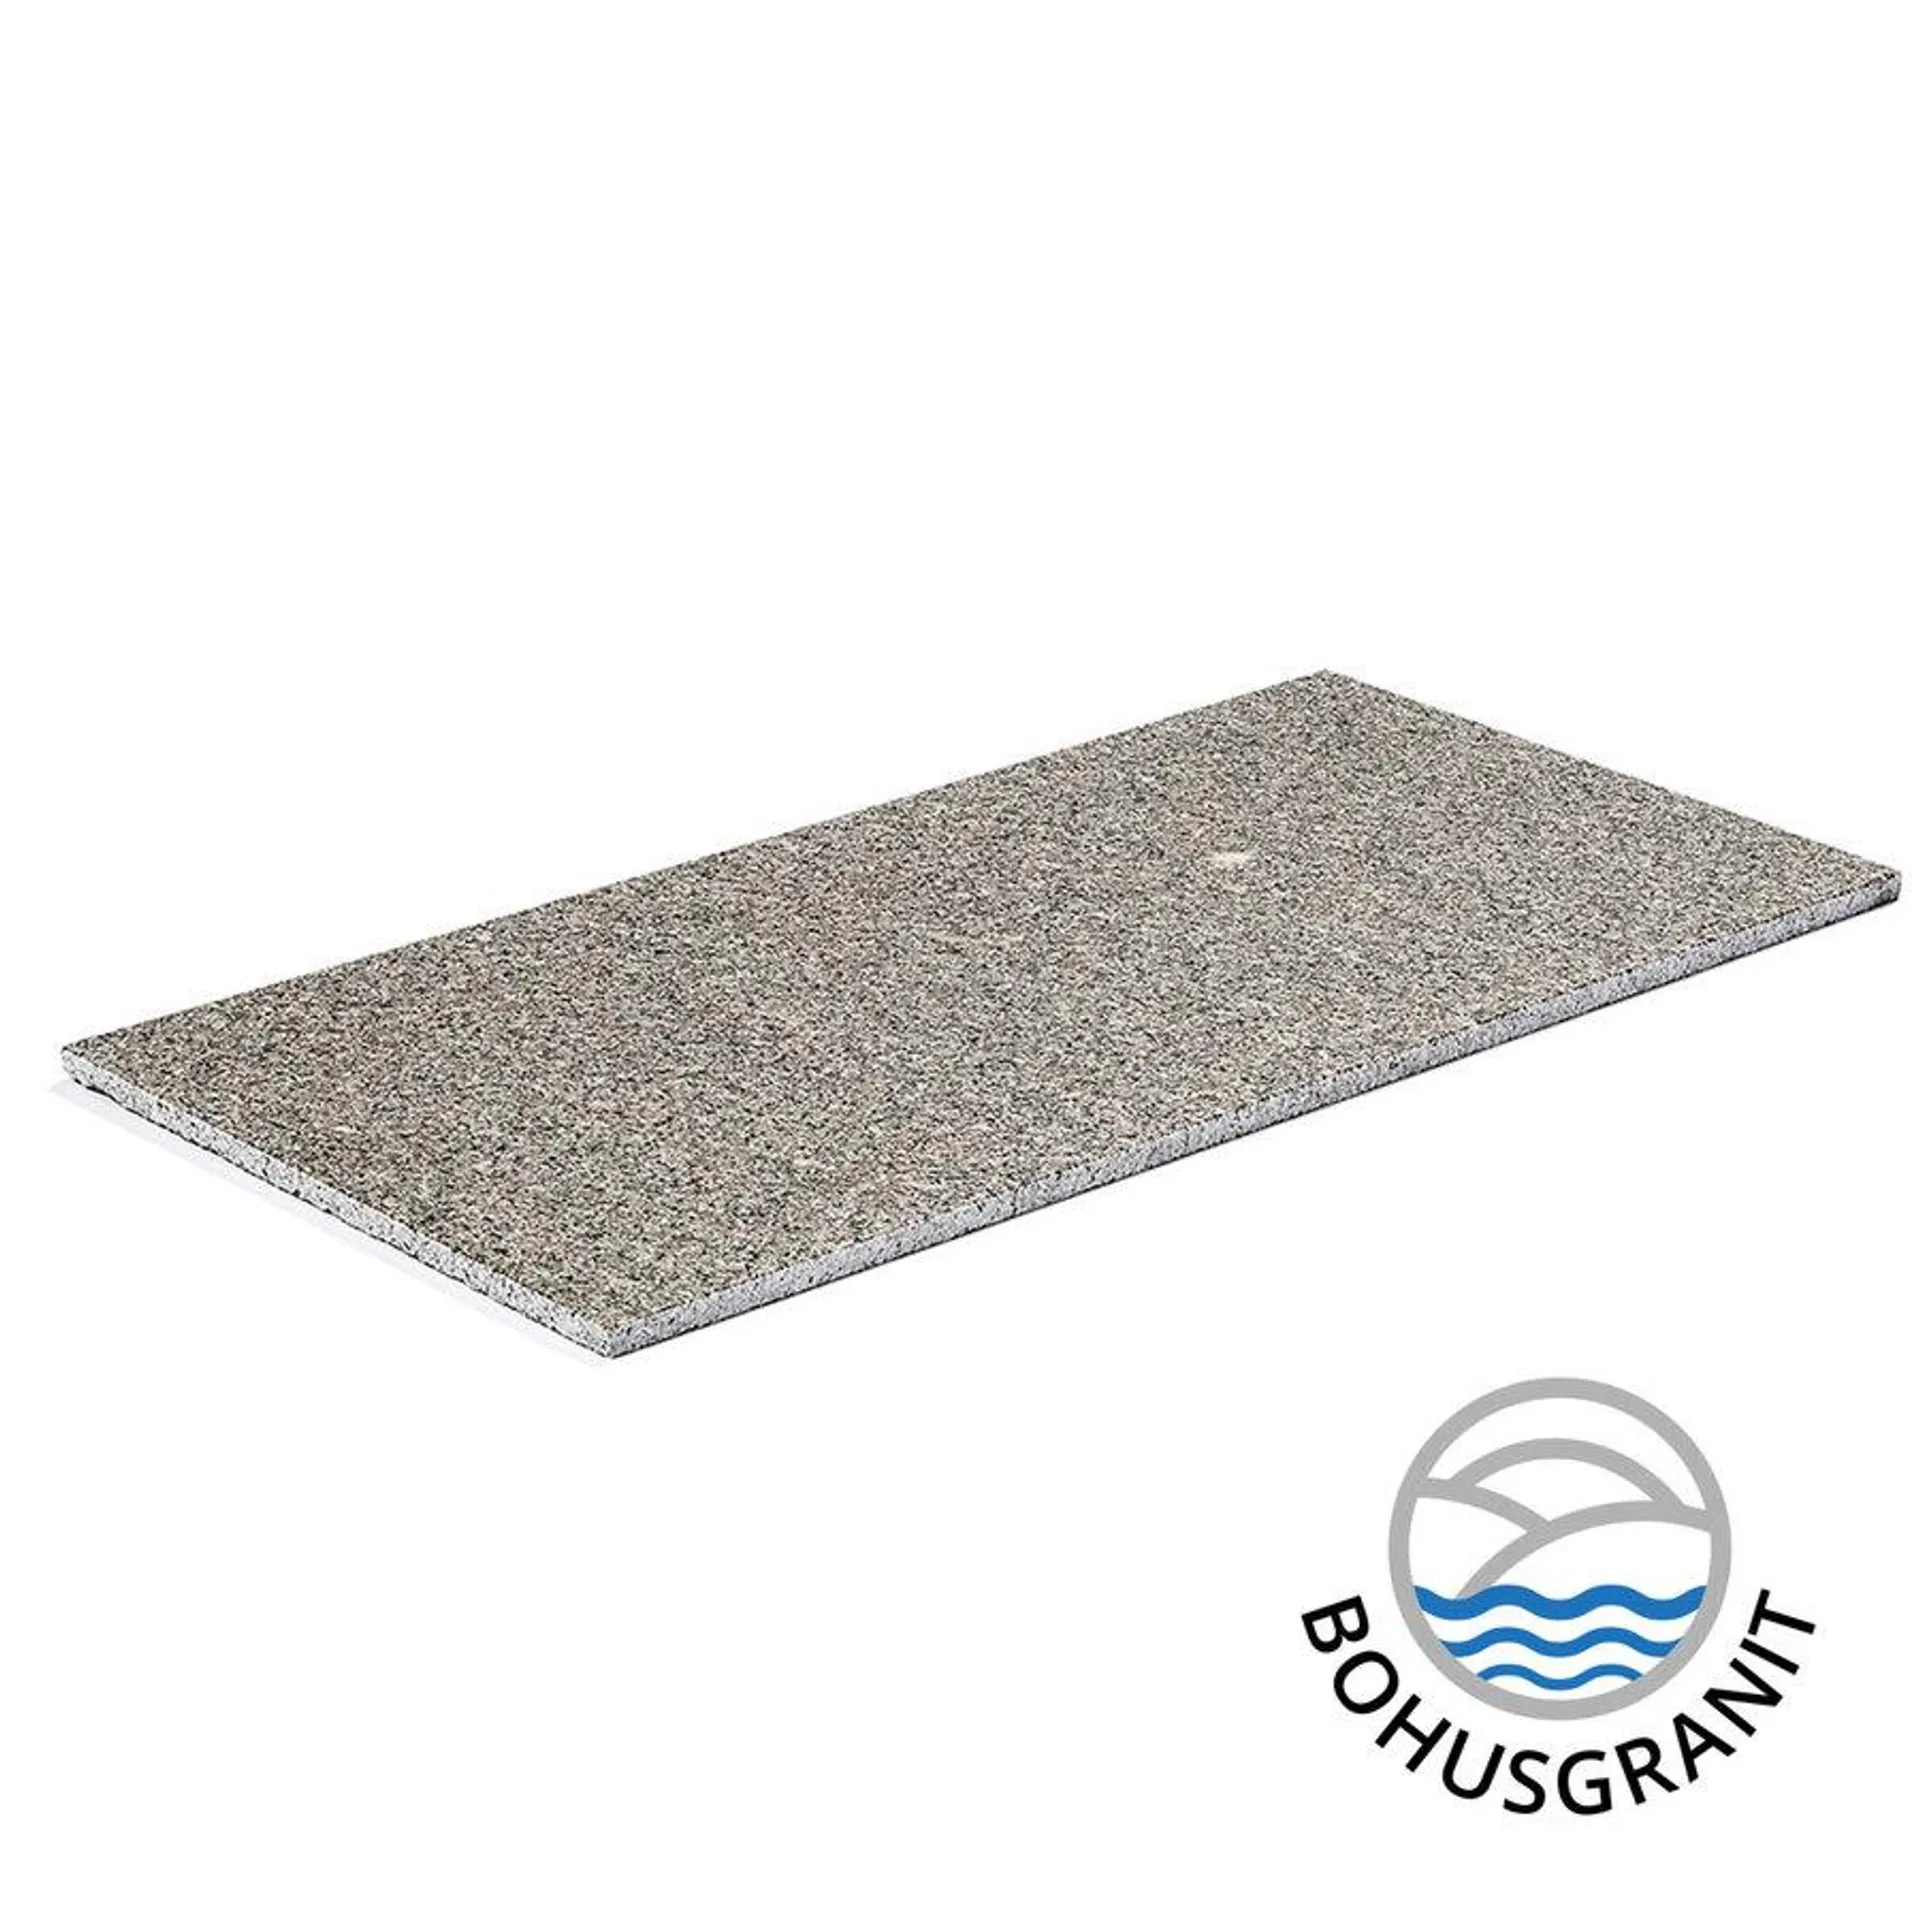 Granit grå Bohus borstad 60x30,5x1 cm